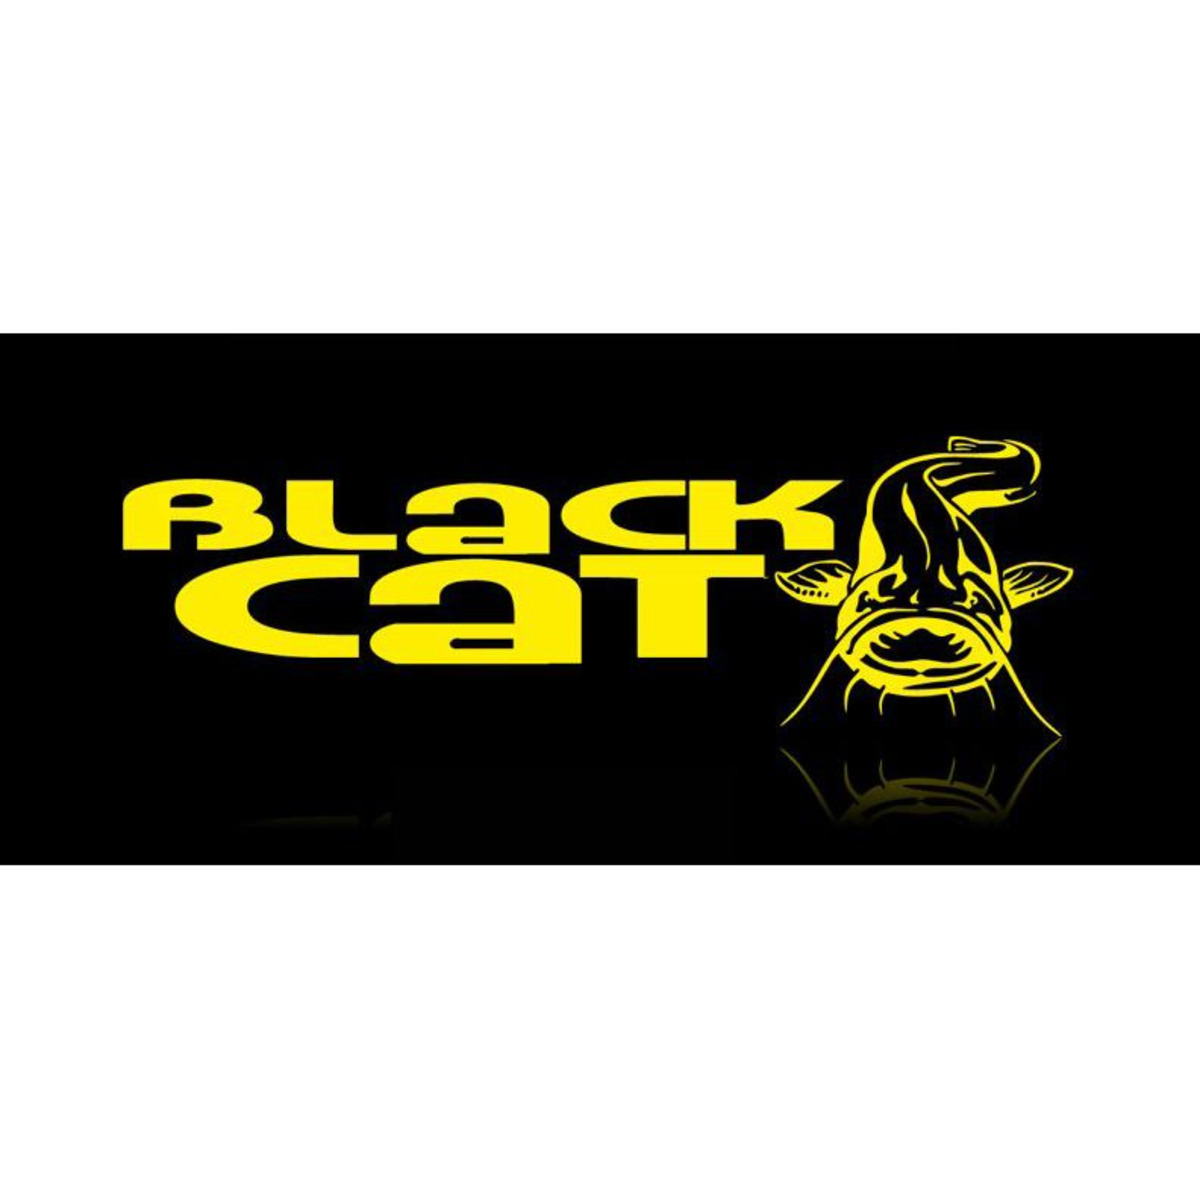 Black Cat Sticker - 42x10 cm